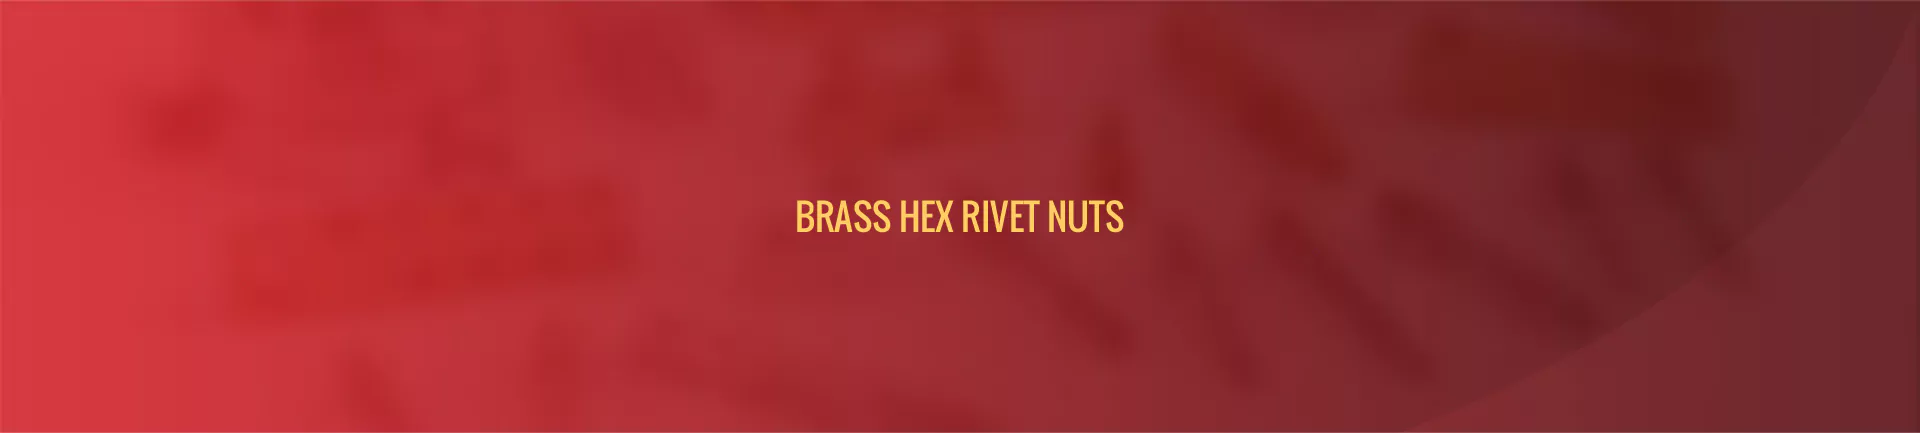 brass-hex-rivet-nuts-banner